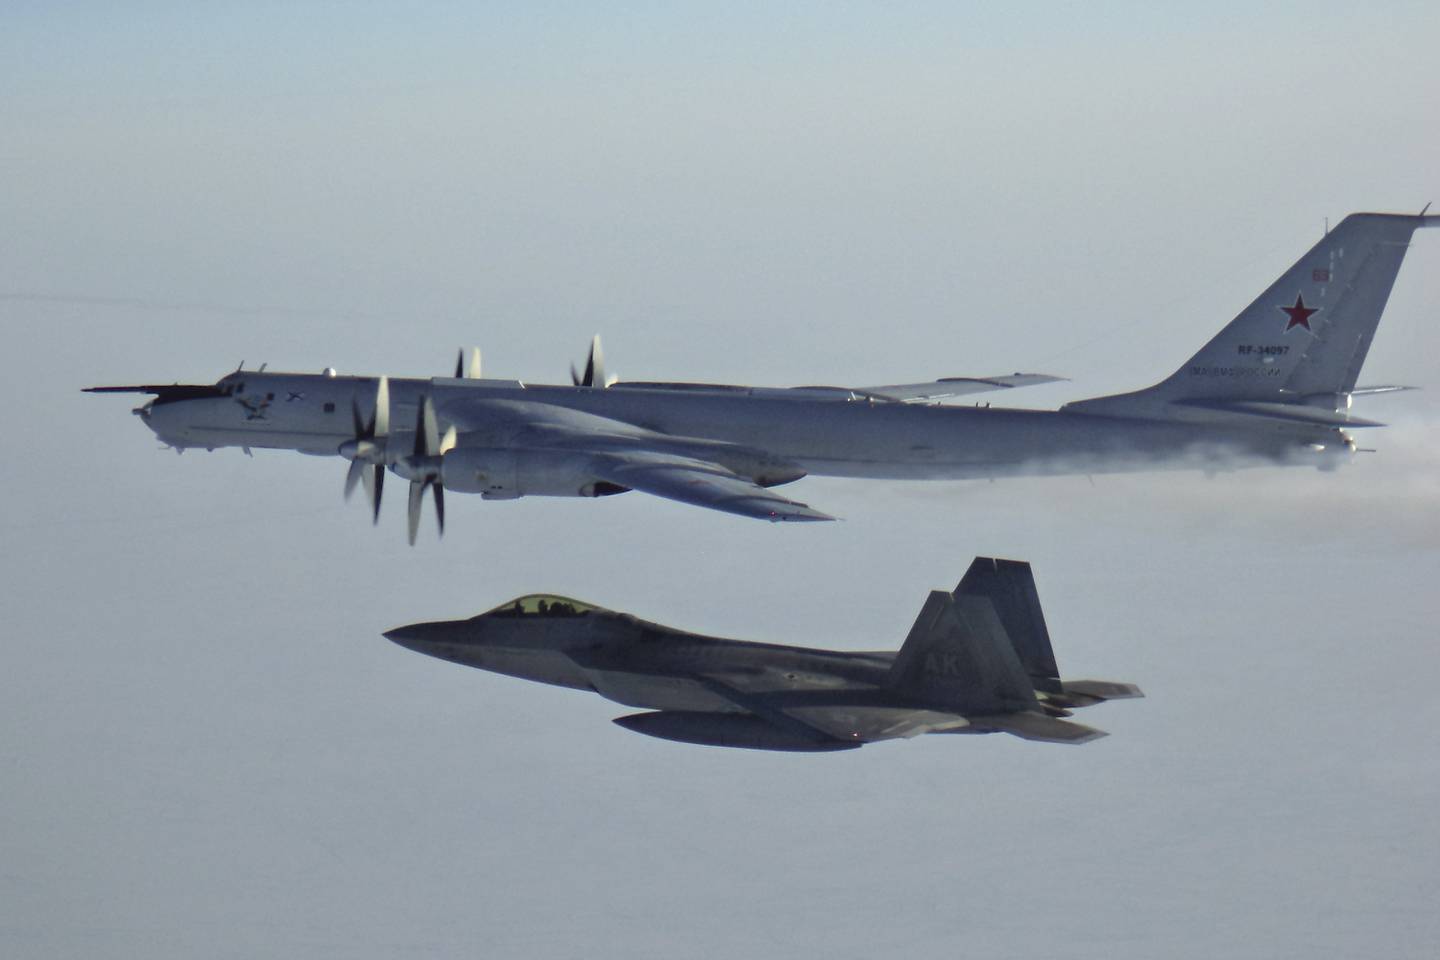 NORAD rastrea aviones rusos que ingresan a la zona de defensa de Alaska